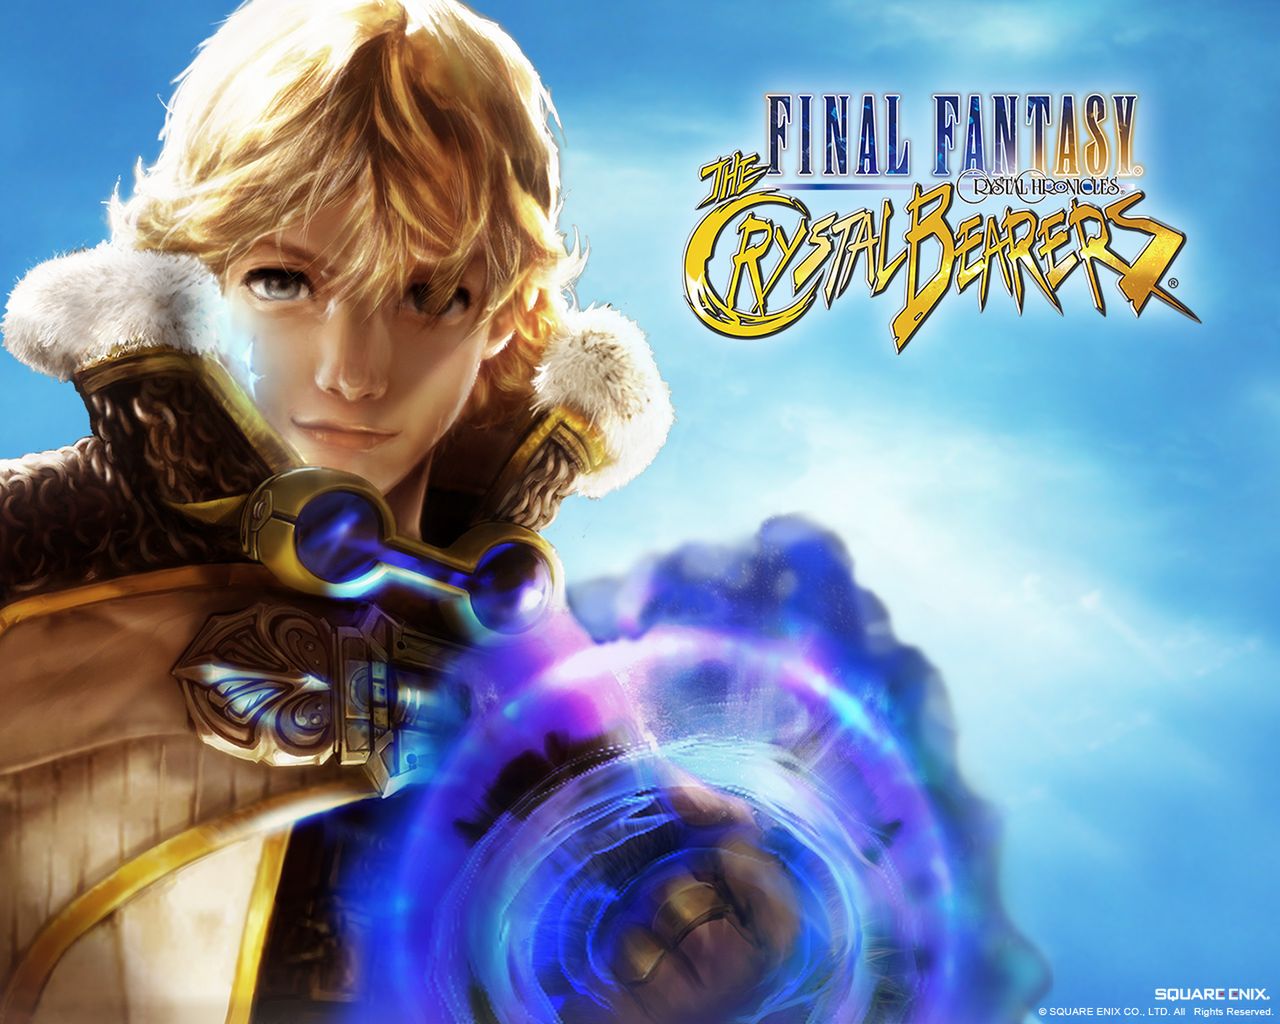 Pełny tytuł gry brzmi Final Fantasy: Crystal Chronicles: Crystal Bearers